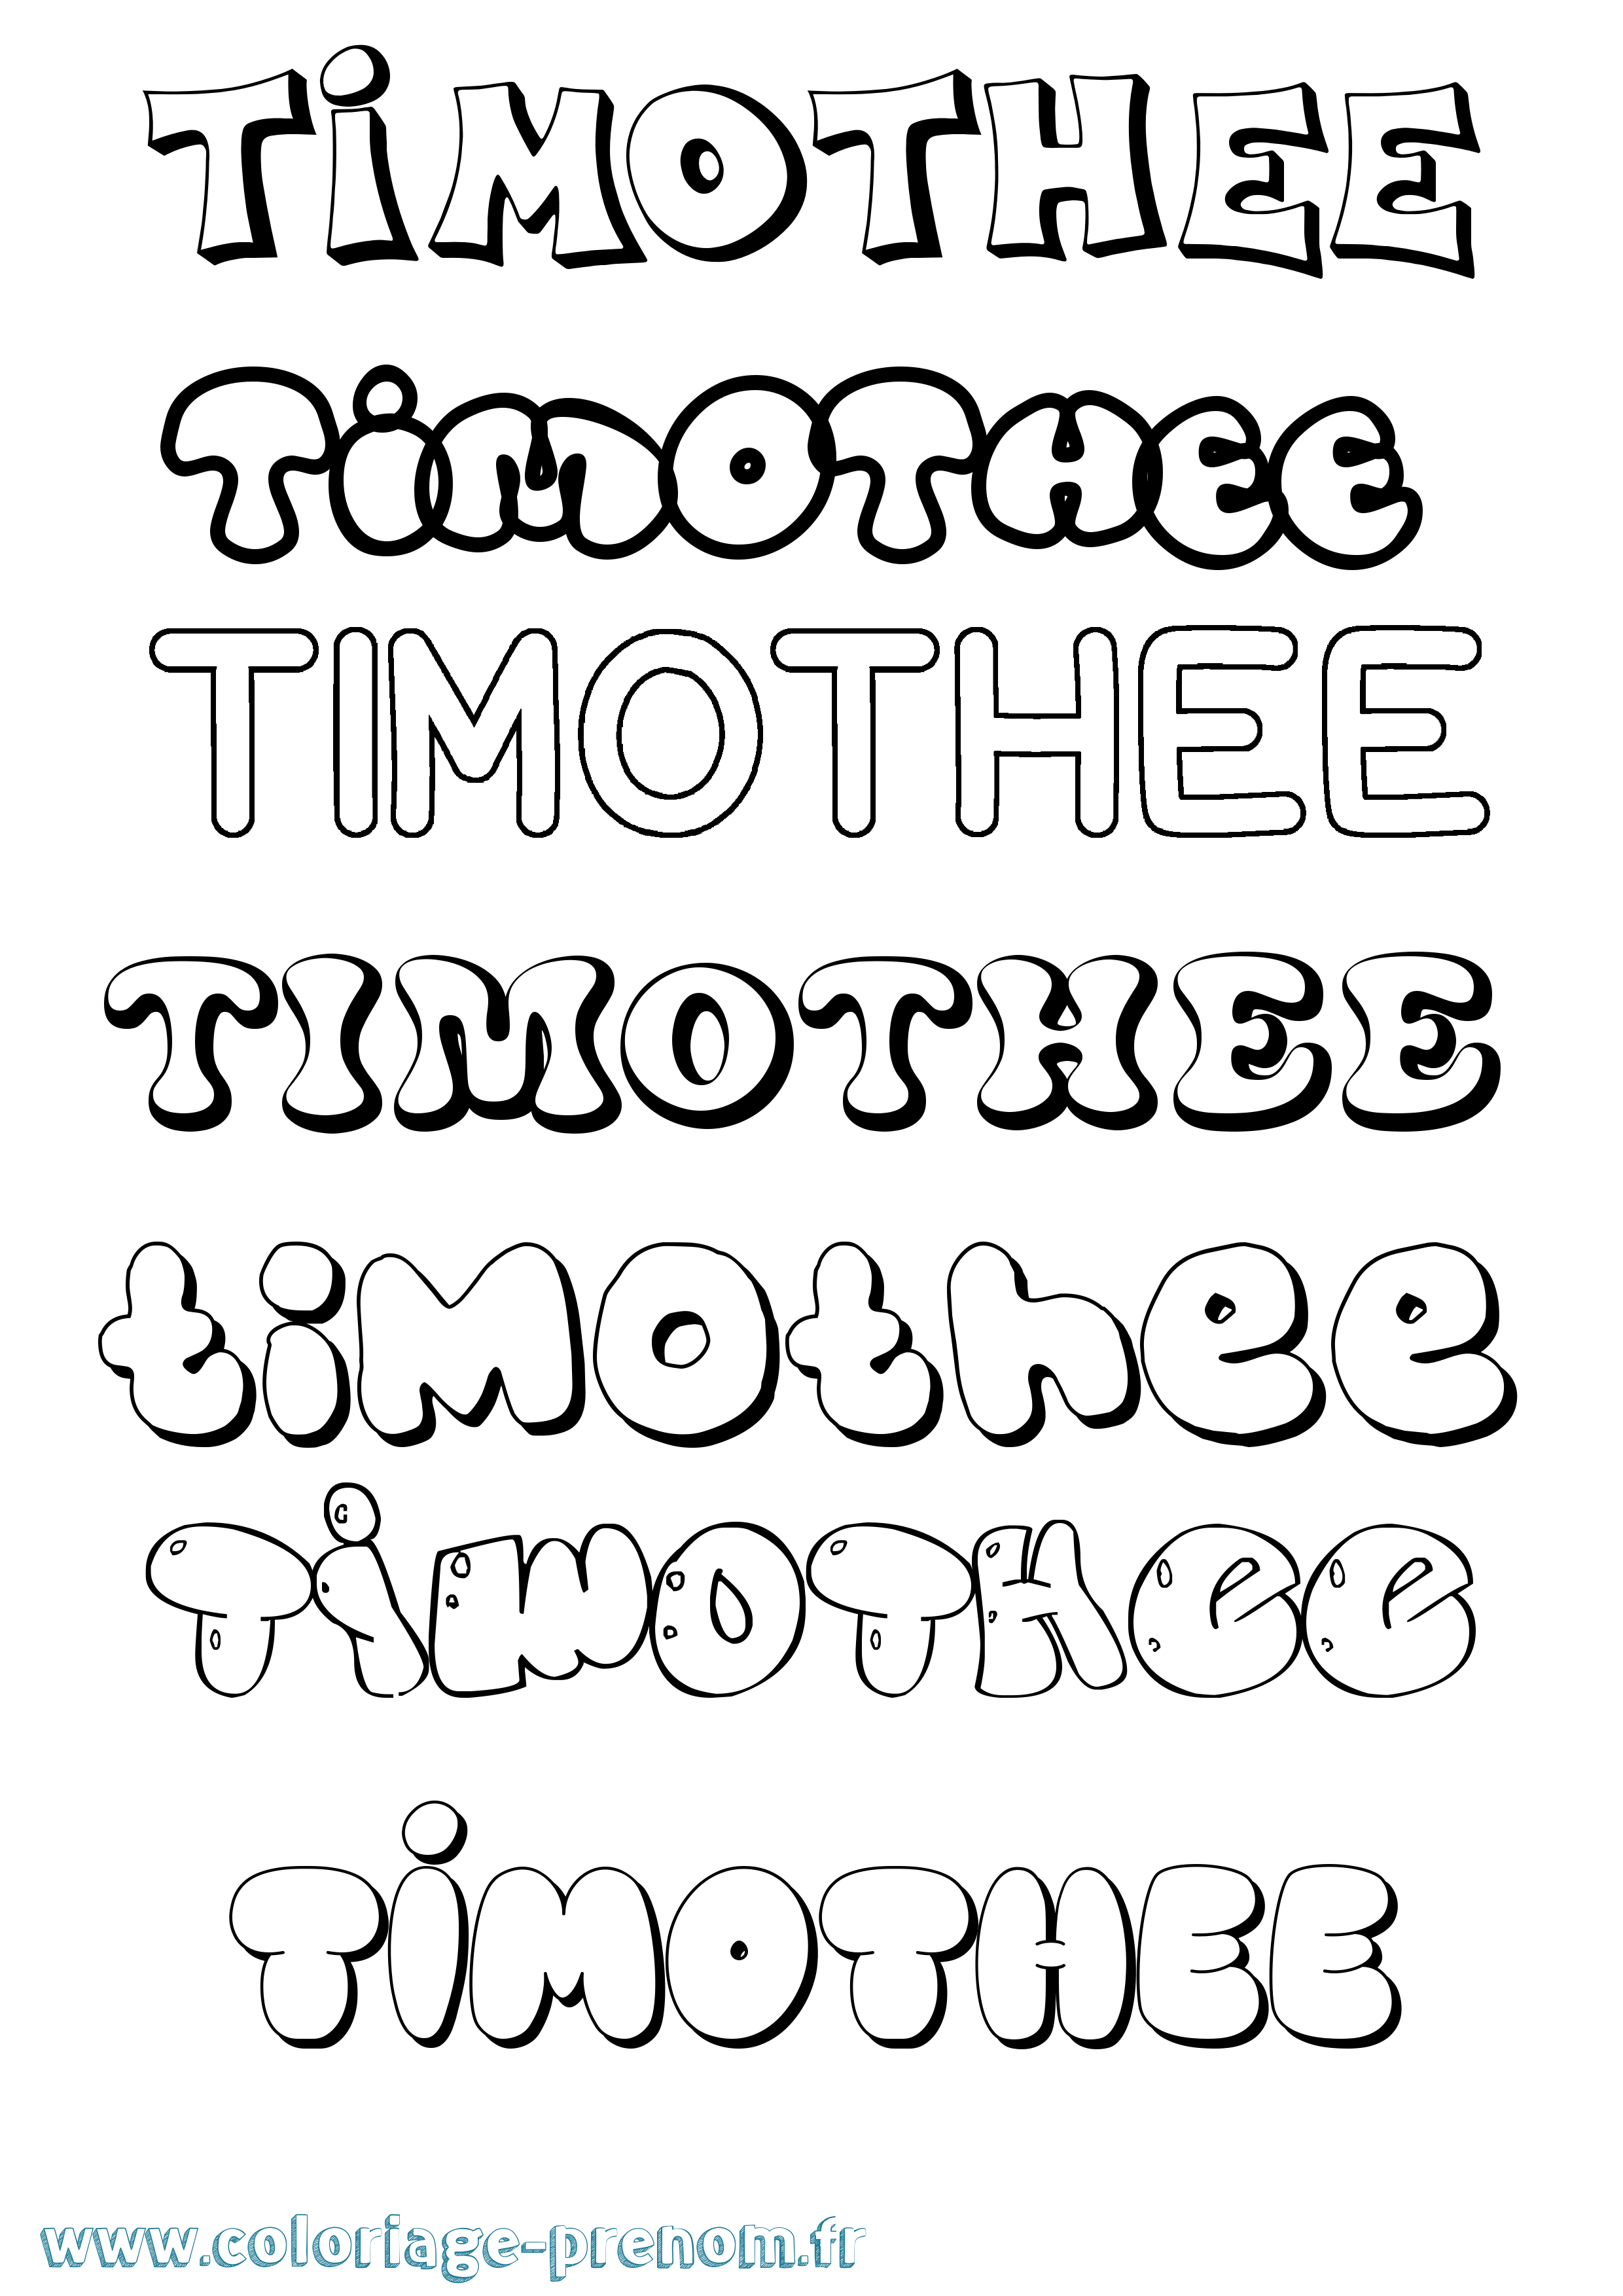 Coloriage prénom Timothee